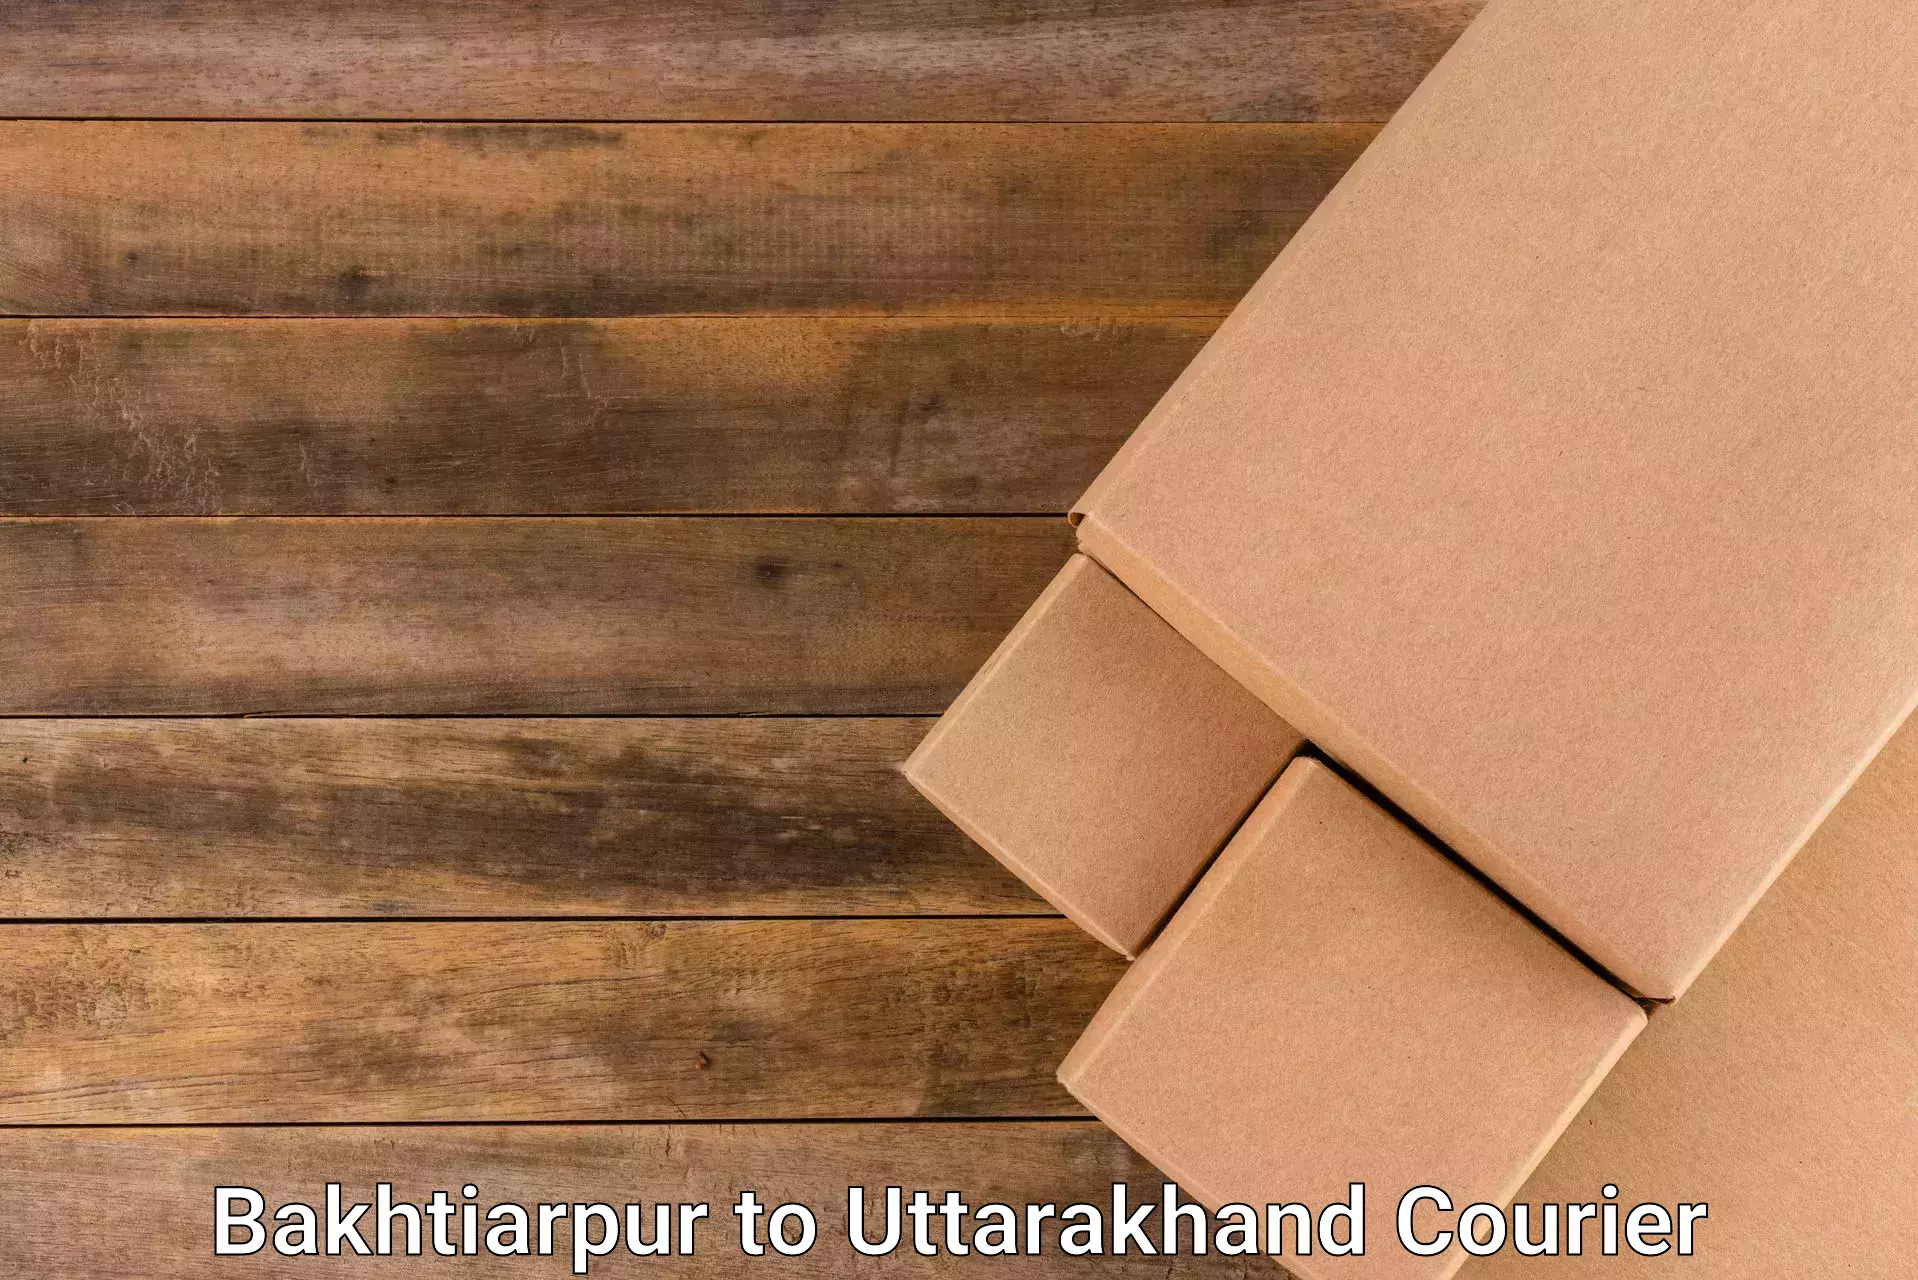 Courier service comparison Bakhtiarpur to Uttarakhand